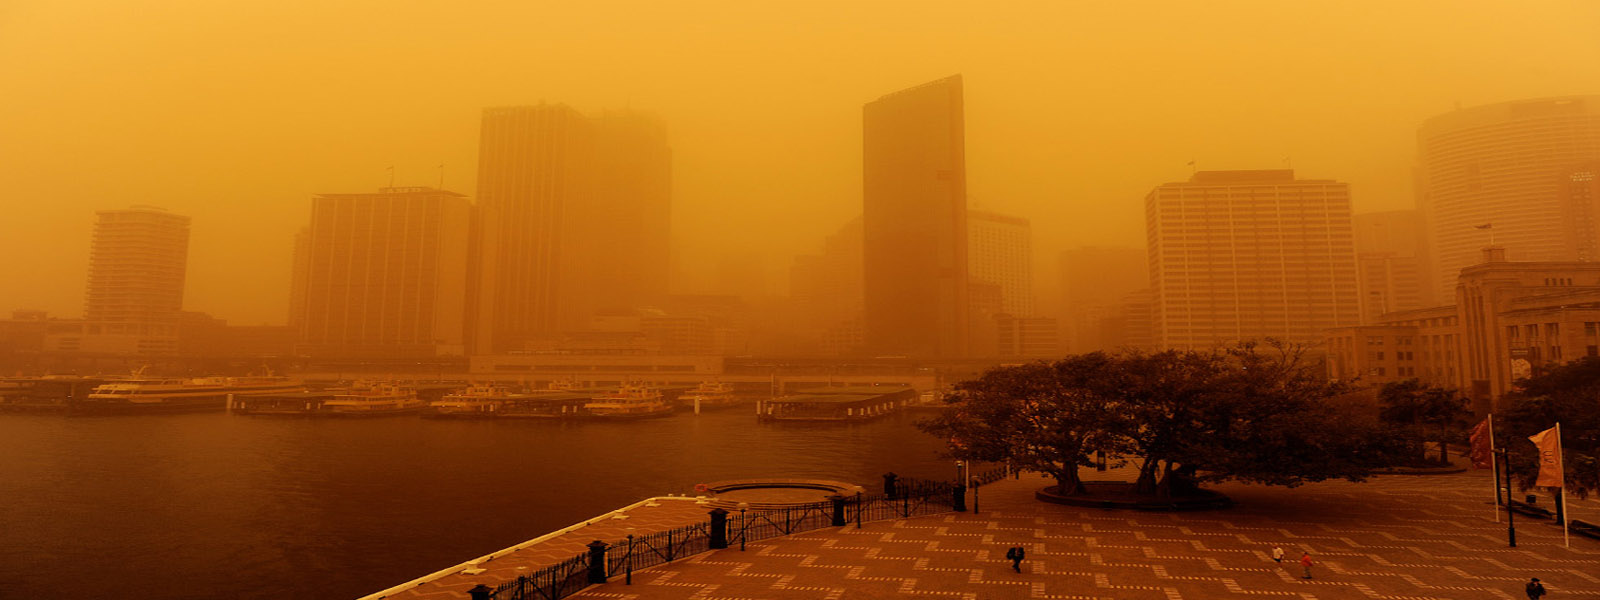 Dust storm covers Australian town in orange